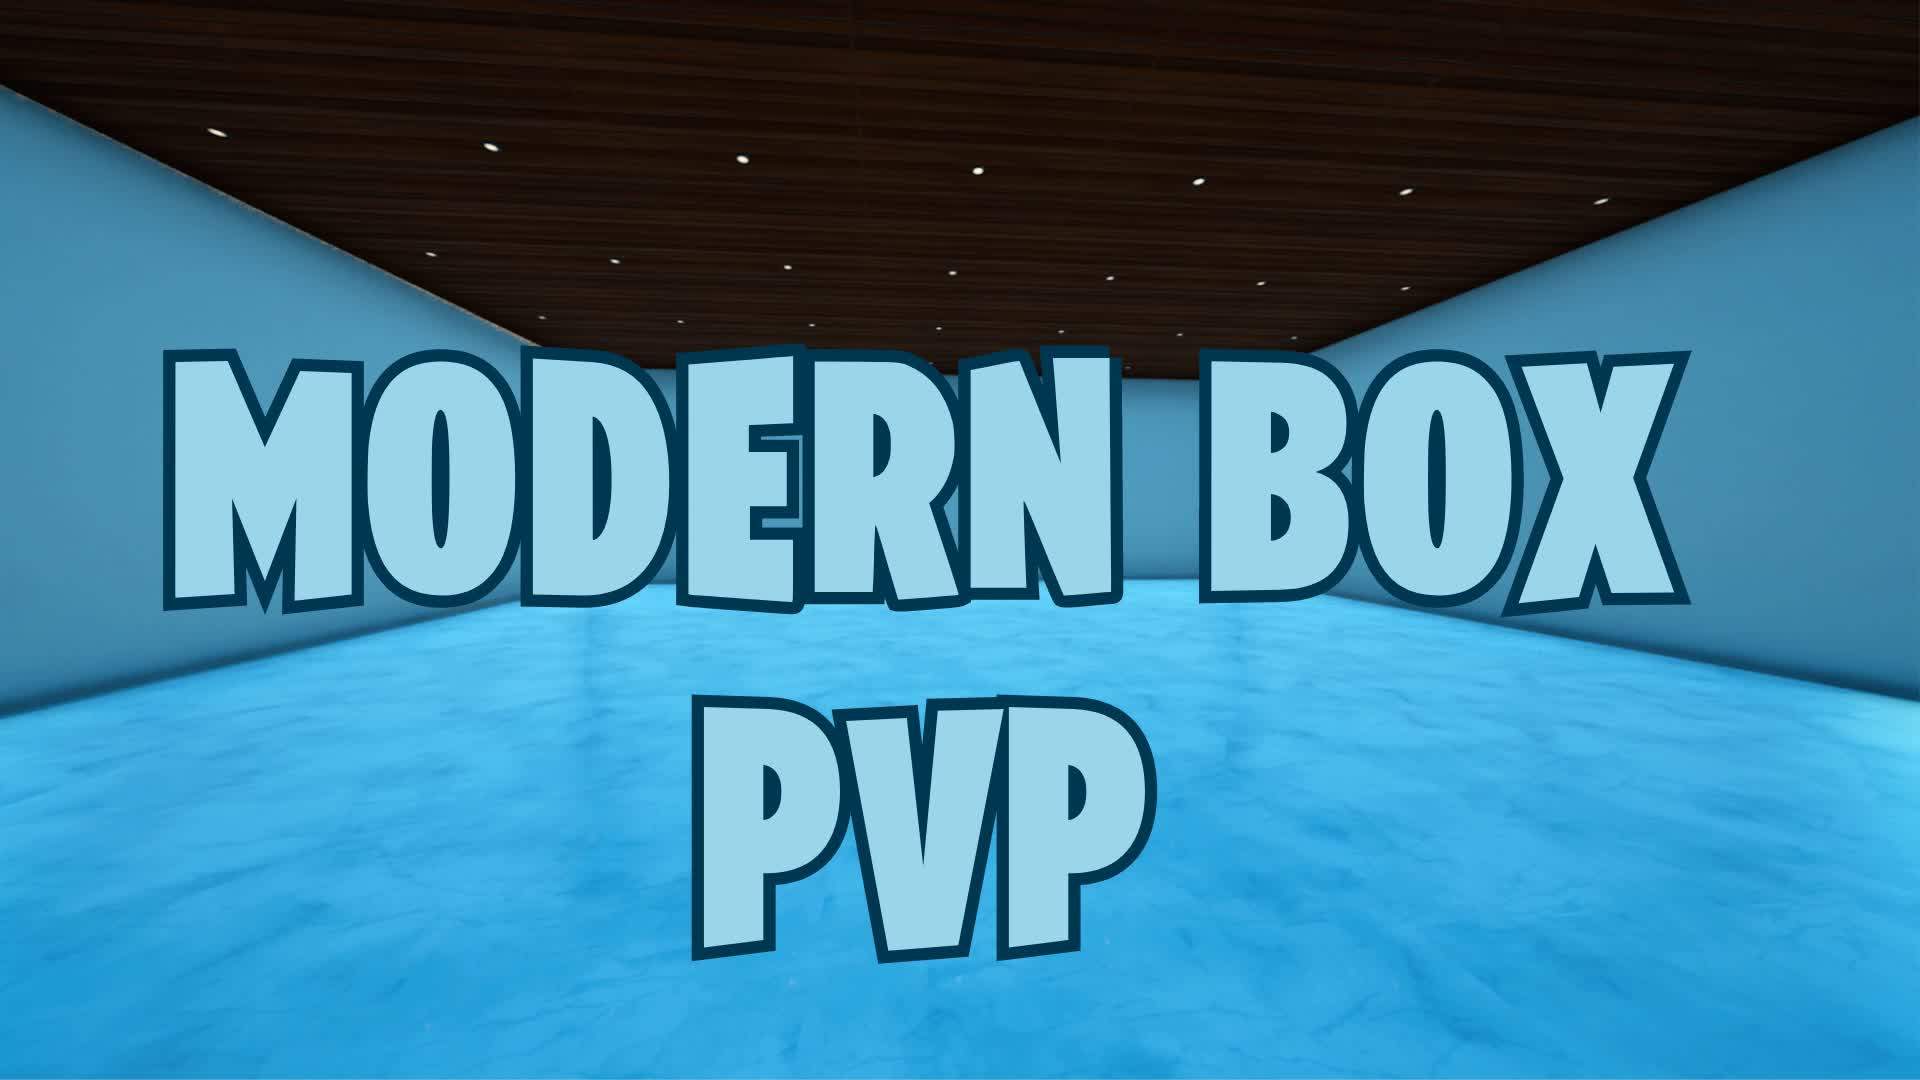 MODERN BOX PVP